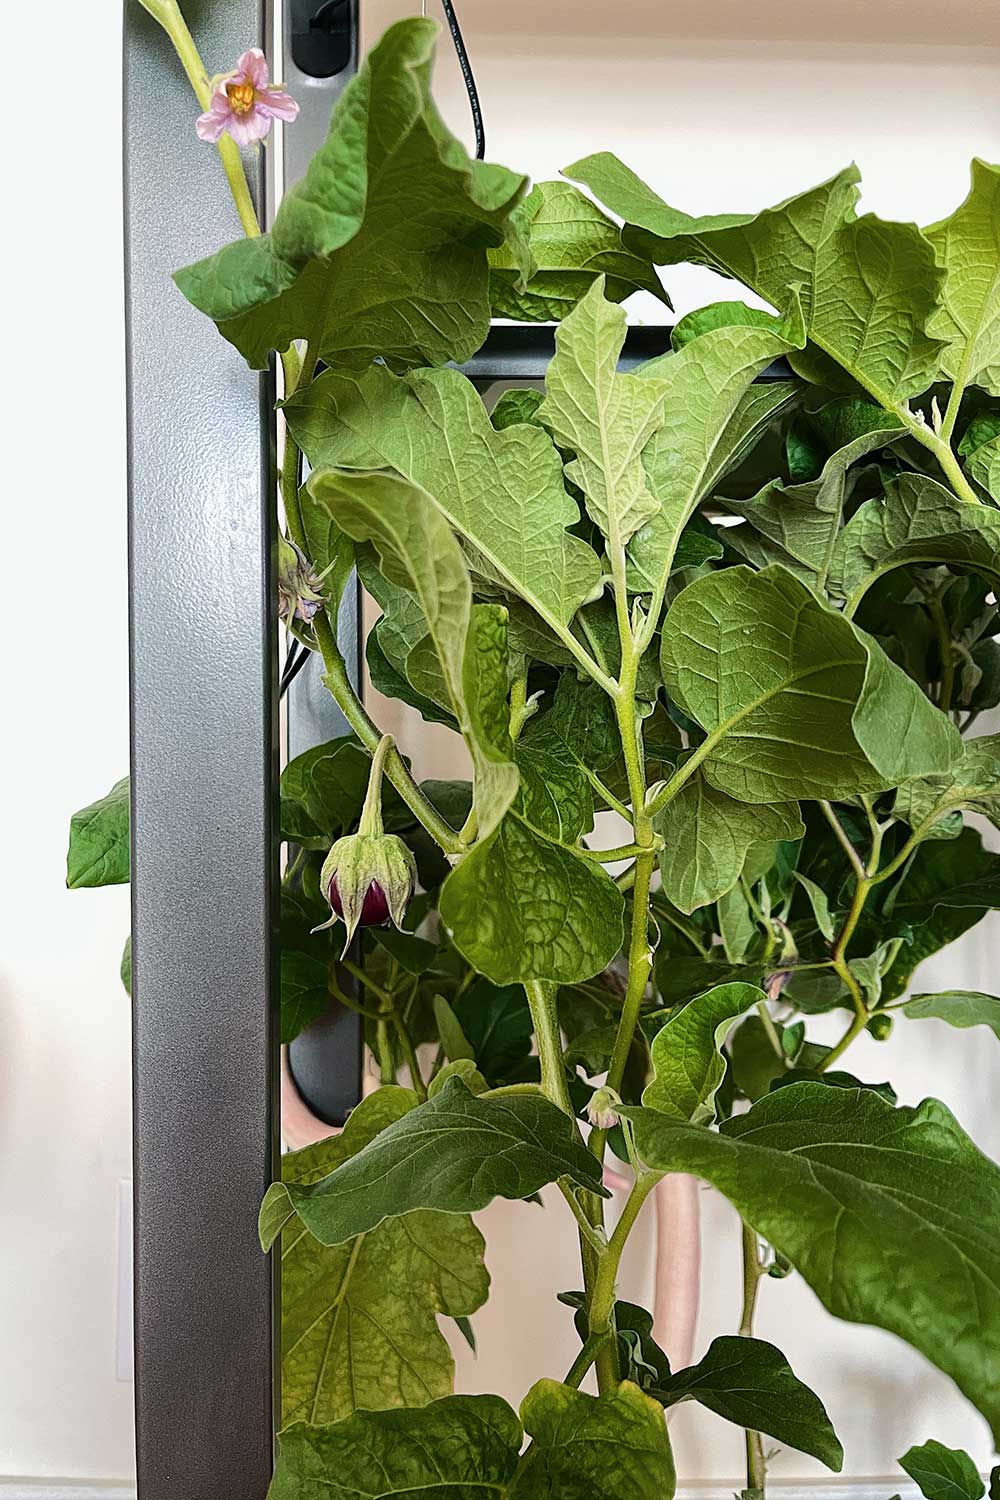 growing-eggplants-in-aerogarden-farm-experiment